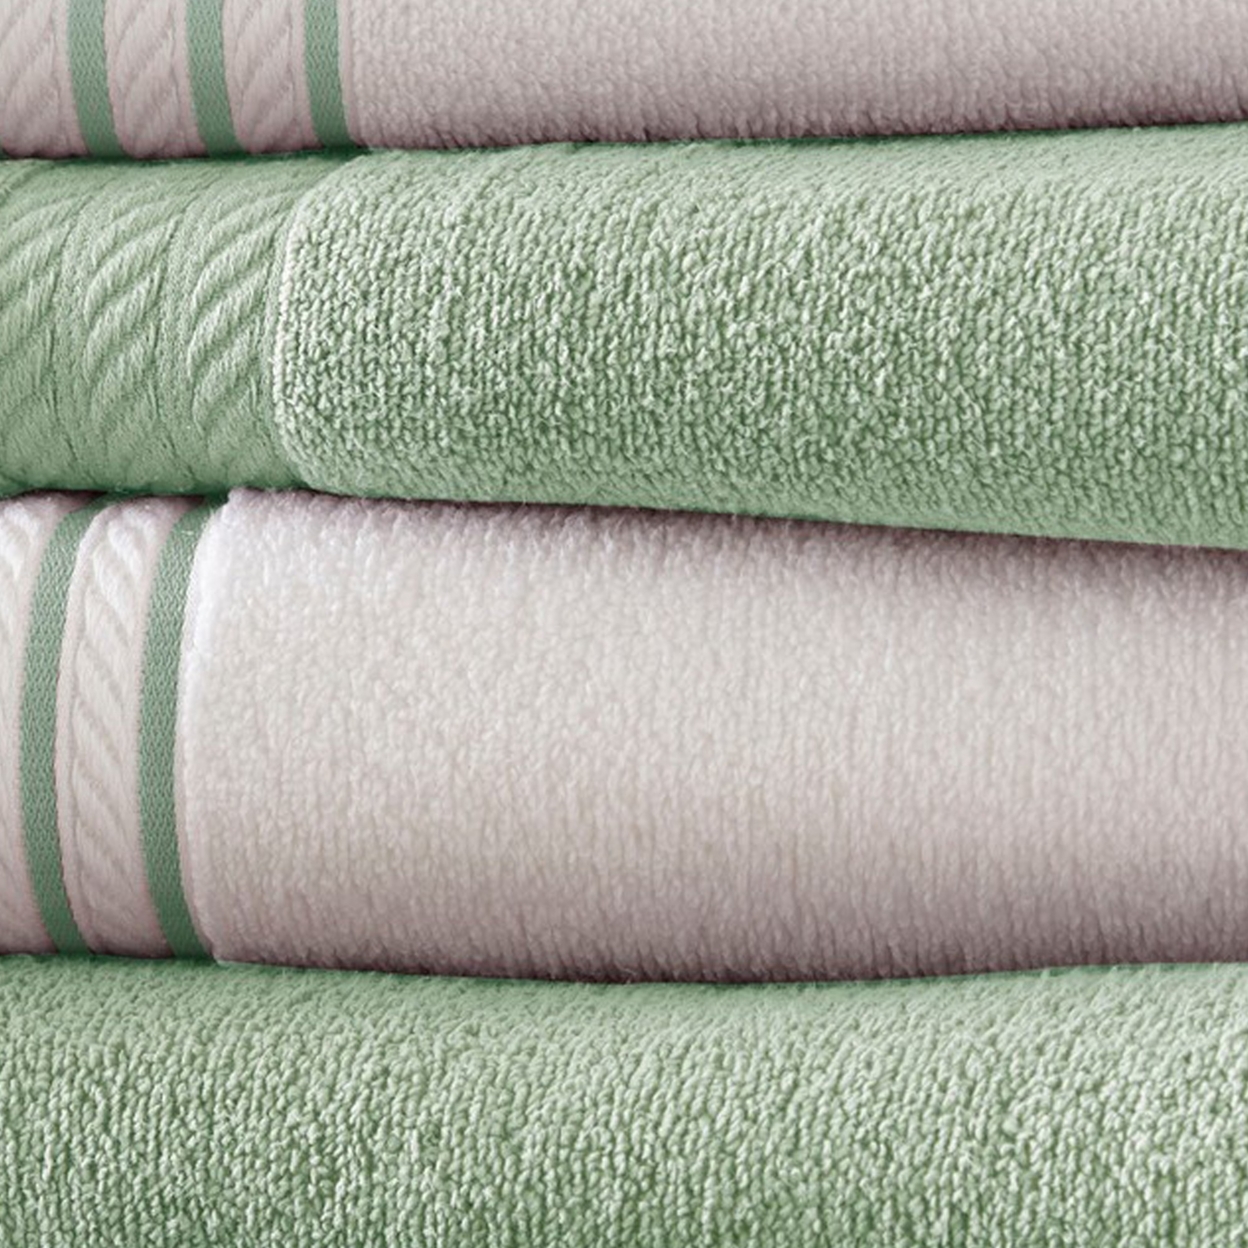 Dana 6 Piece Soft Egyptian Cotton Towel Set, Striped, Sage Green, White- Saltoro Sherpi